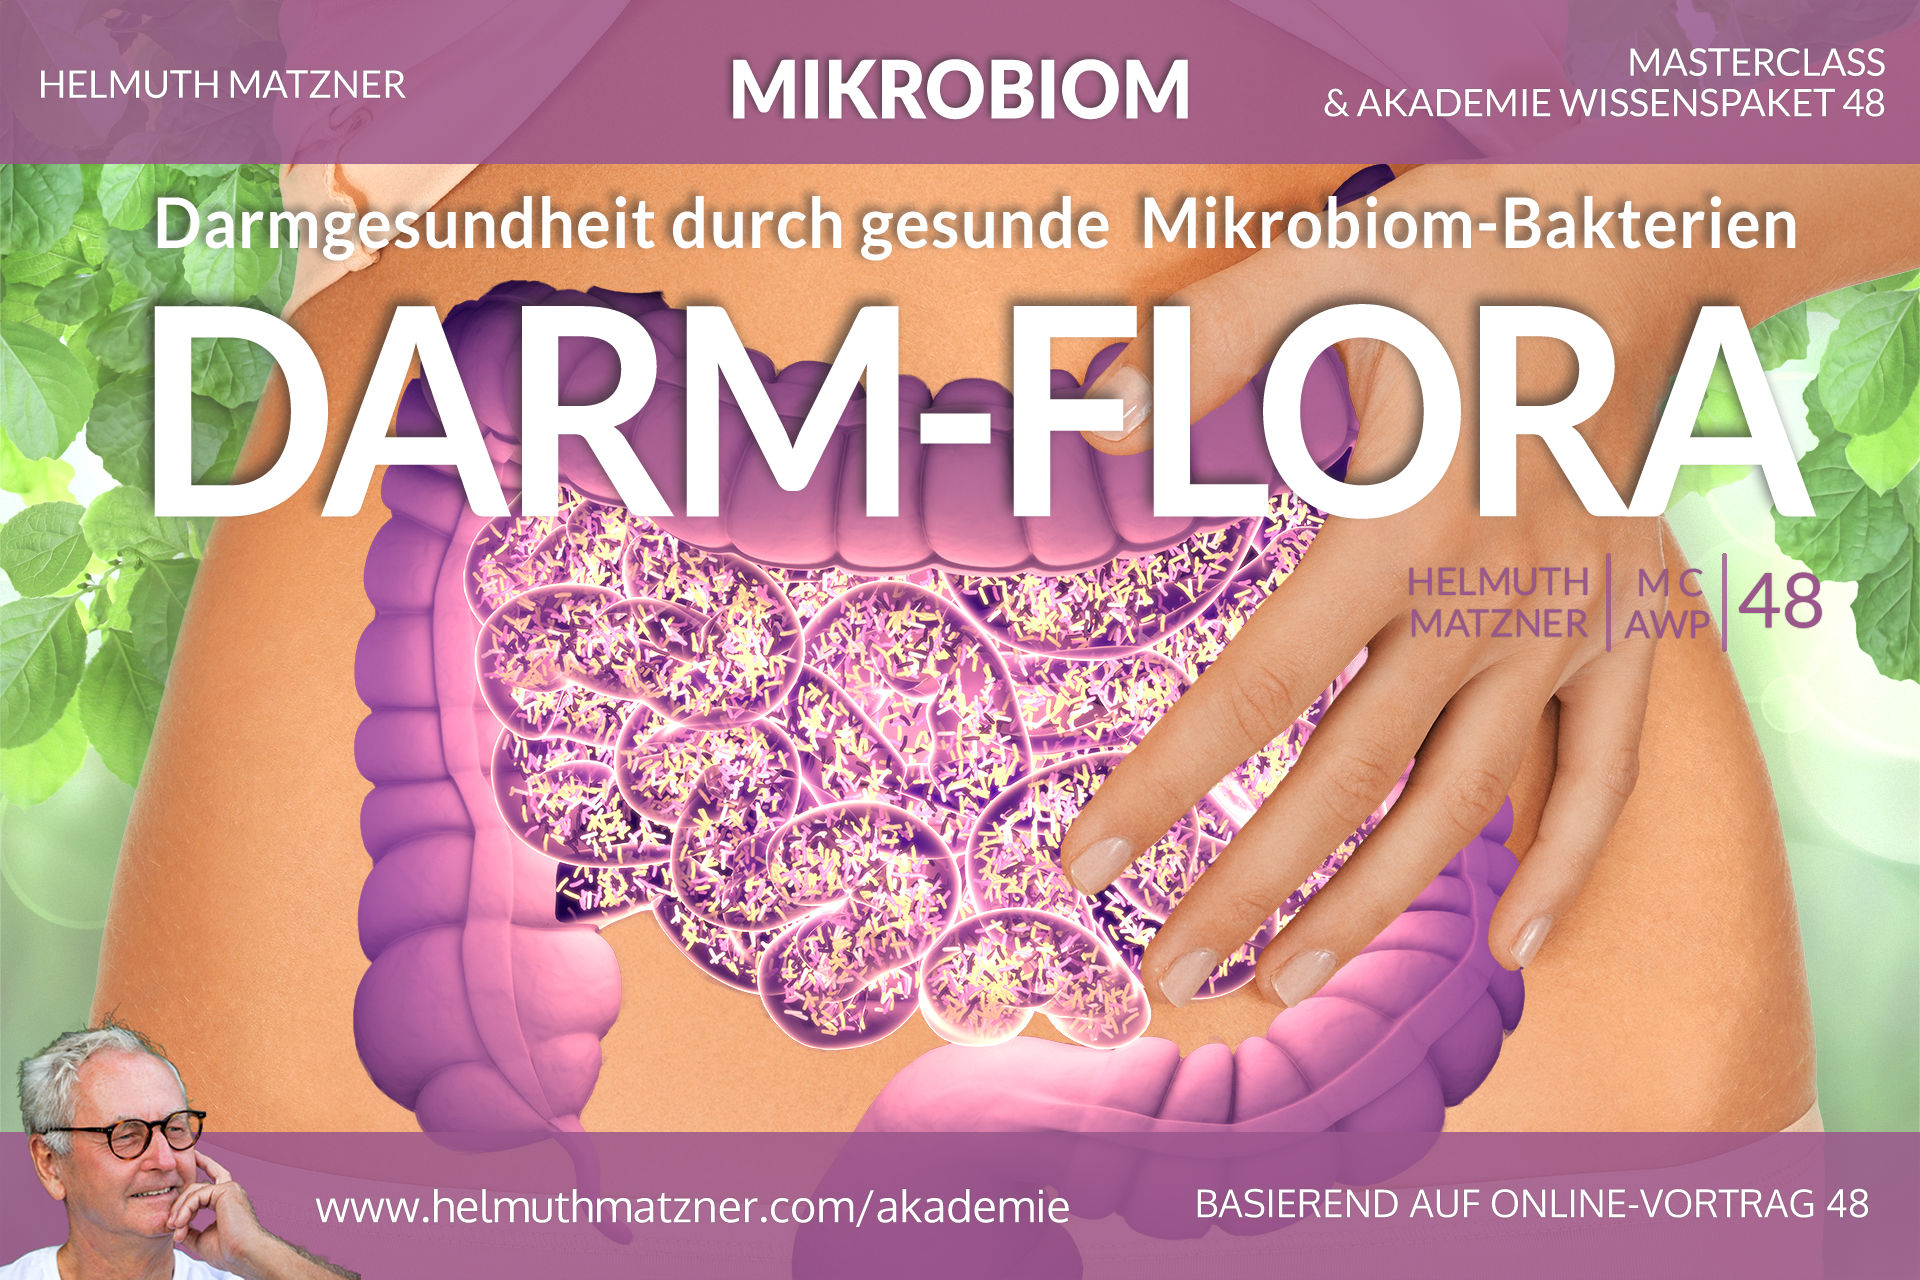 Helmuth Matzner - Masterclass & Akademie Wissenspaket 48 - Darmflora - Mikrobiom - Akademie - vMC02